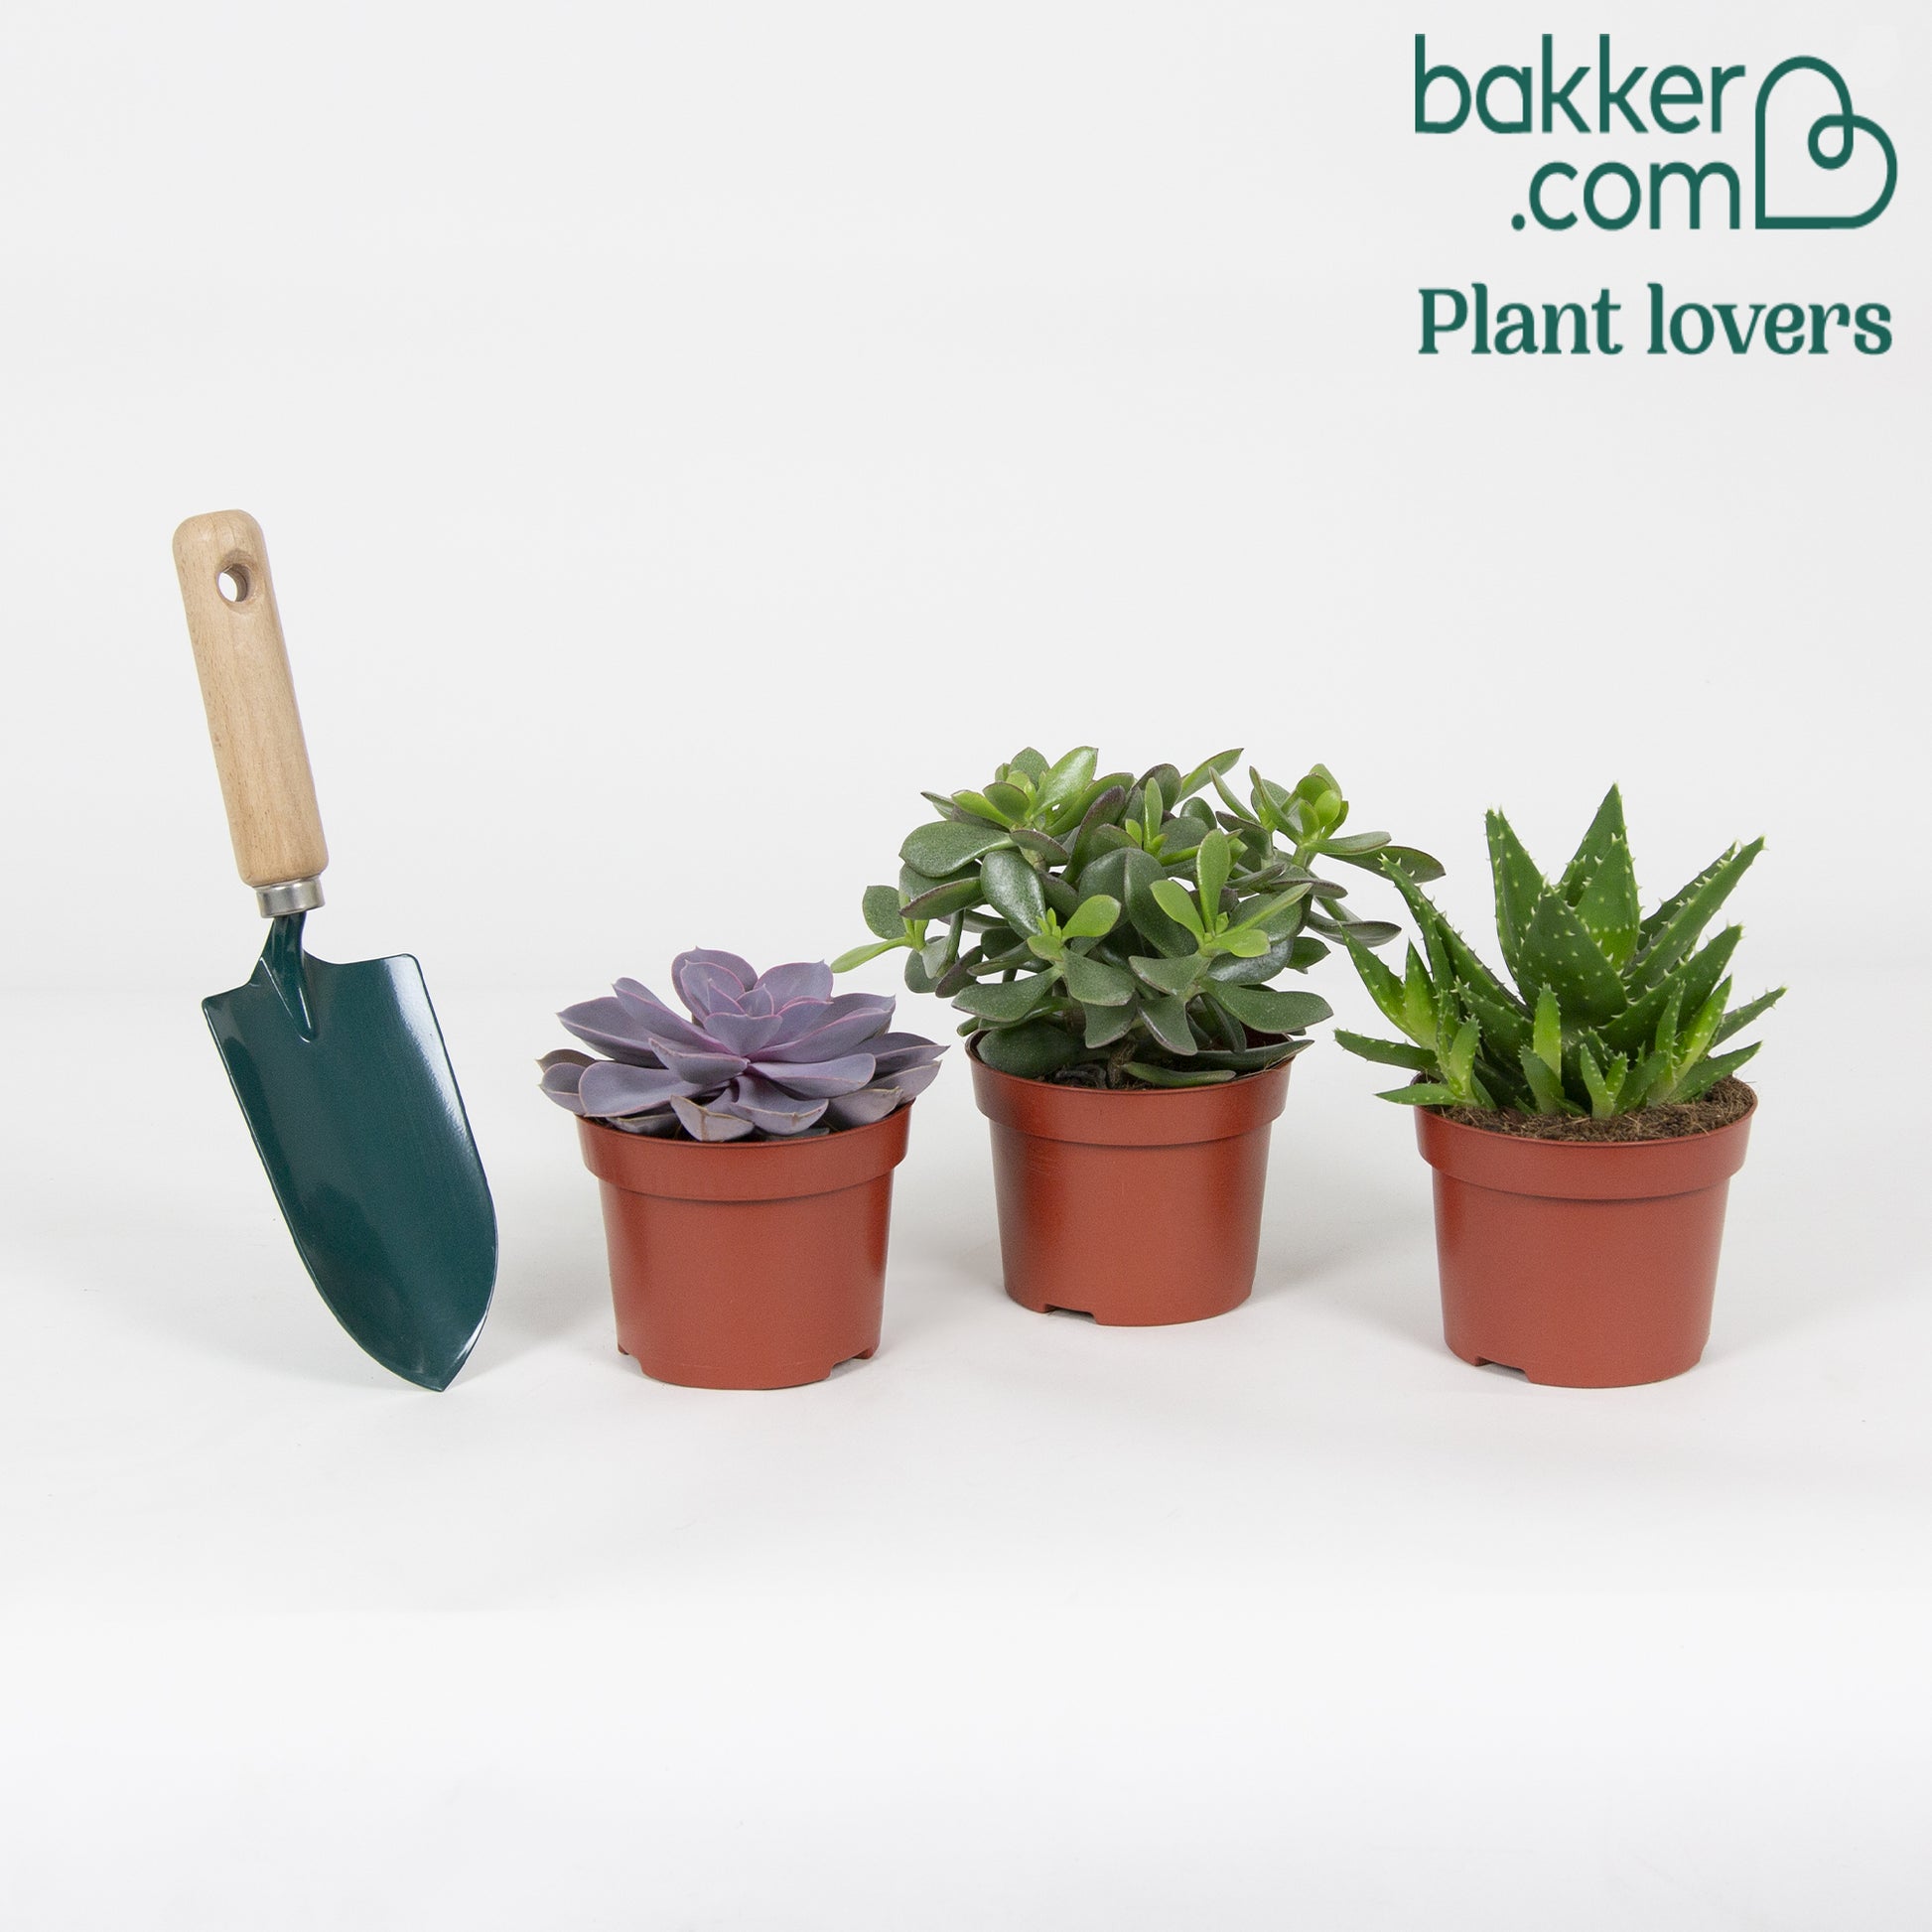 Bakker - Collection de 3 succulentes - Crassula 'Minova Magic' + 2 Gasterias - Aloe Perfoliata, Echeveria 'Purple Pearl', Crassula 'Minova Magic'